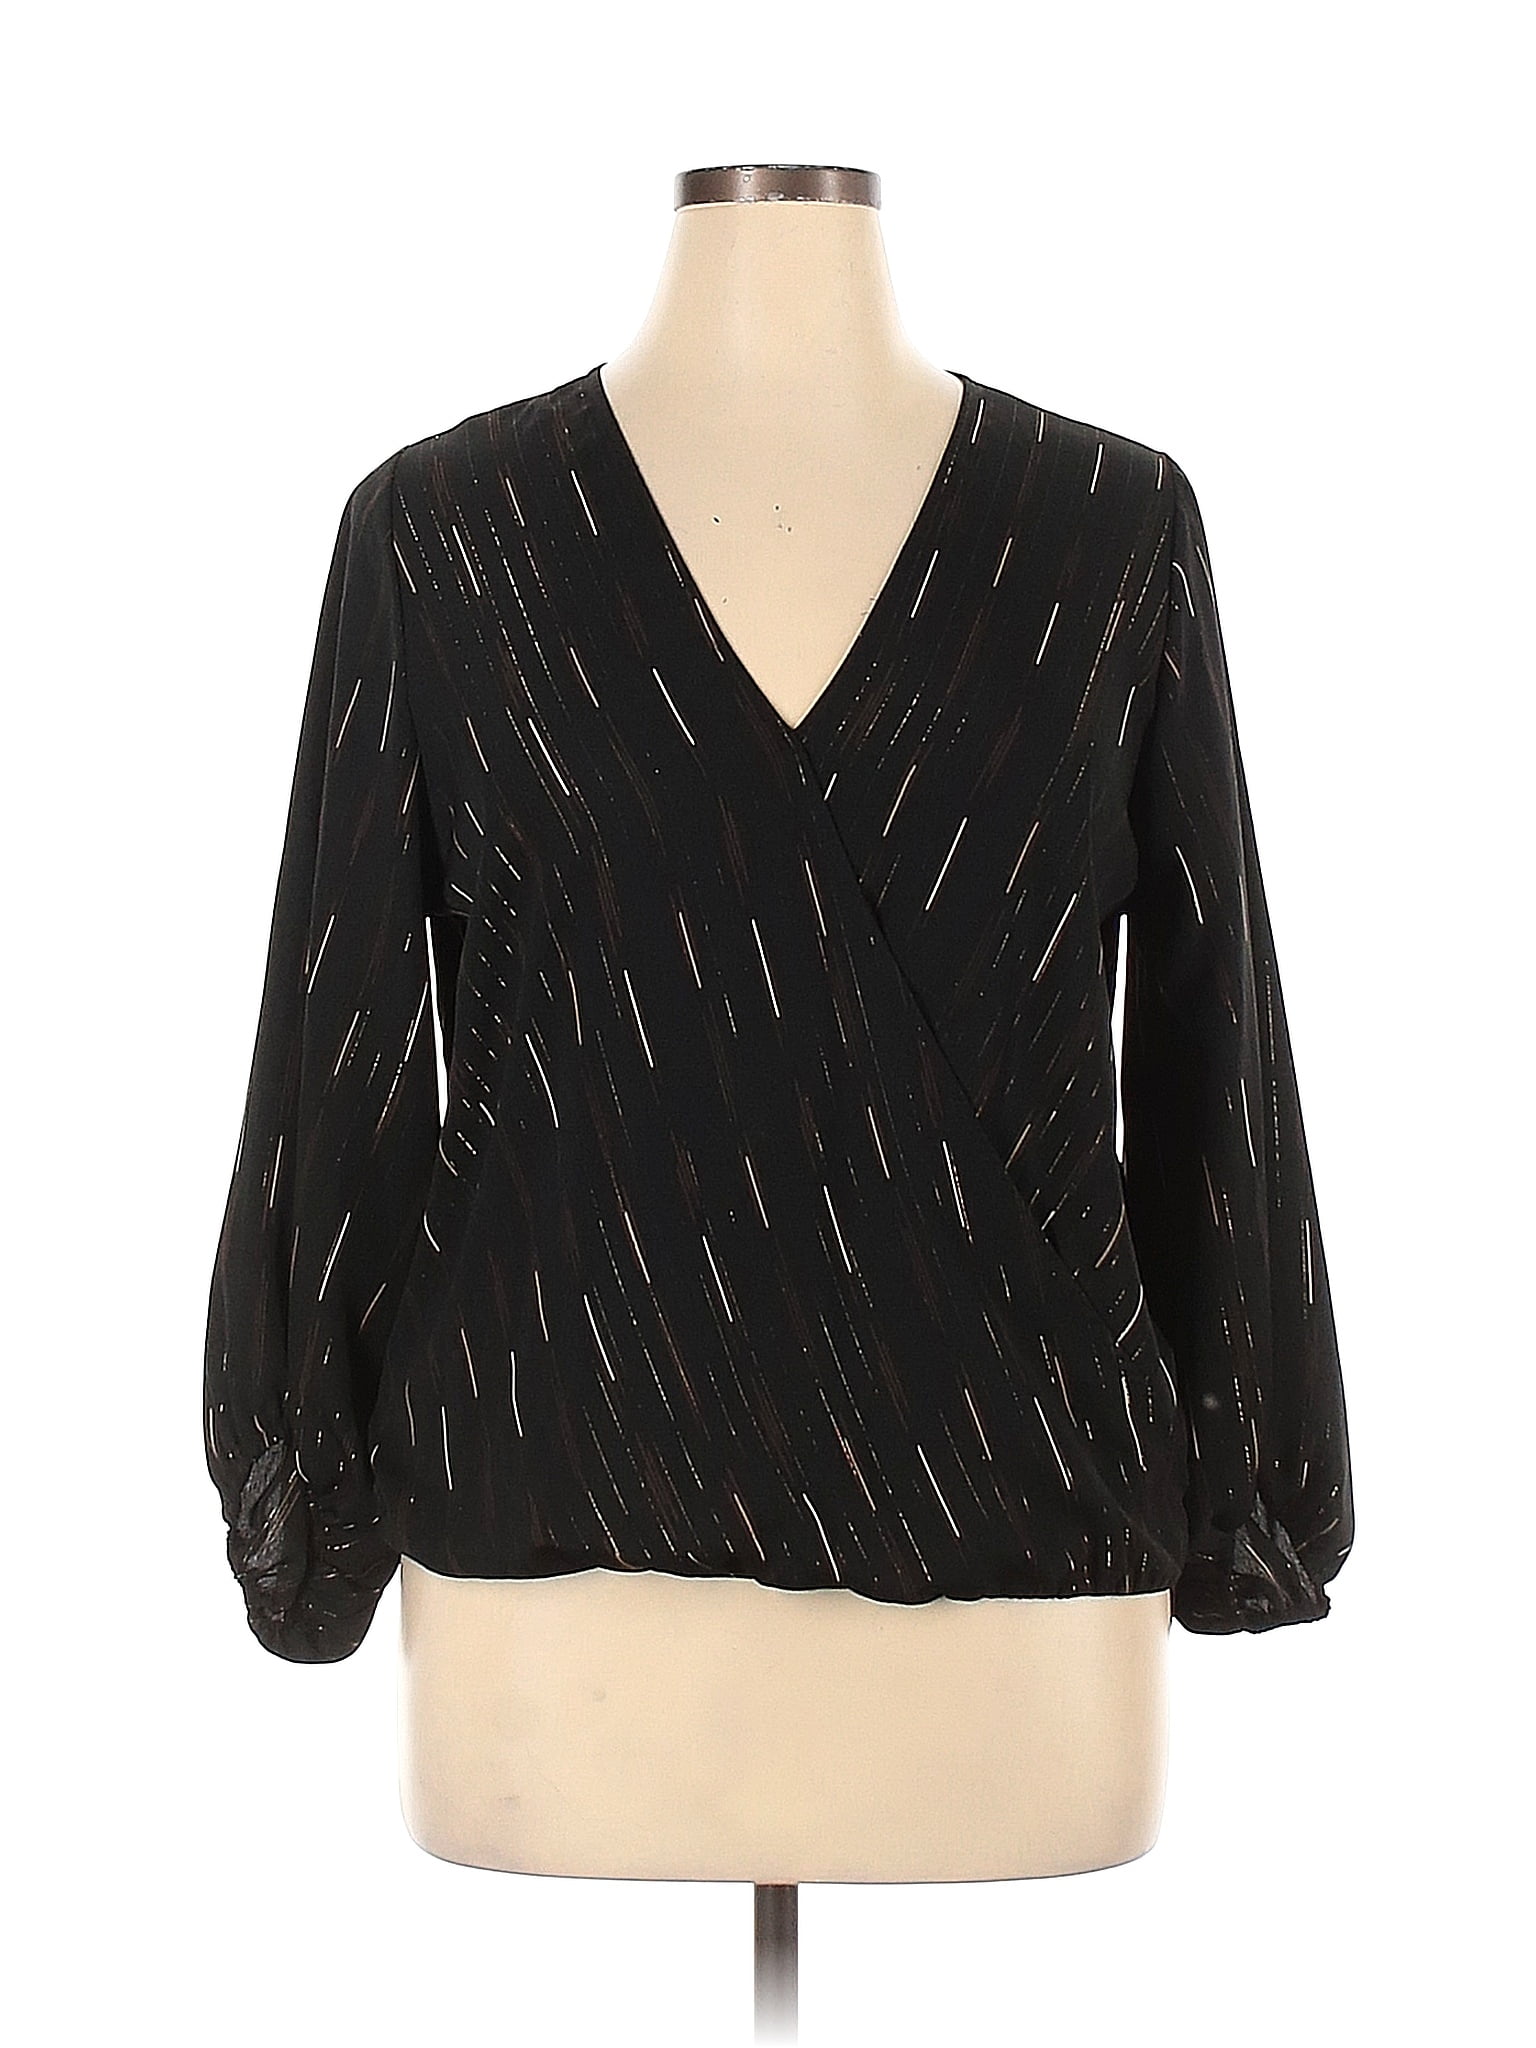 West Kei 100% Polyester Stripes Black Long Sleeve Blouse Size XL - 60% ...